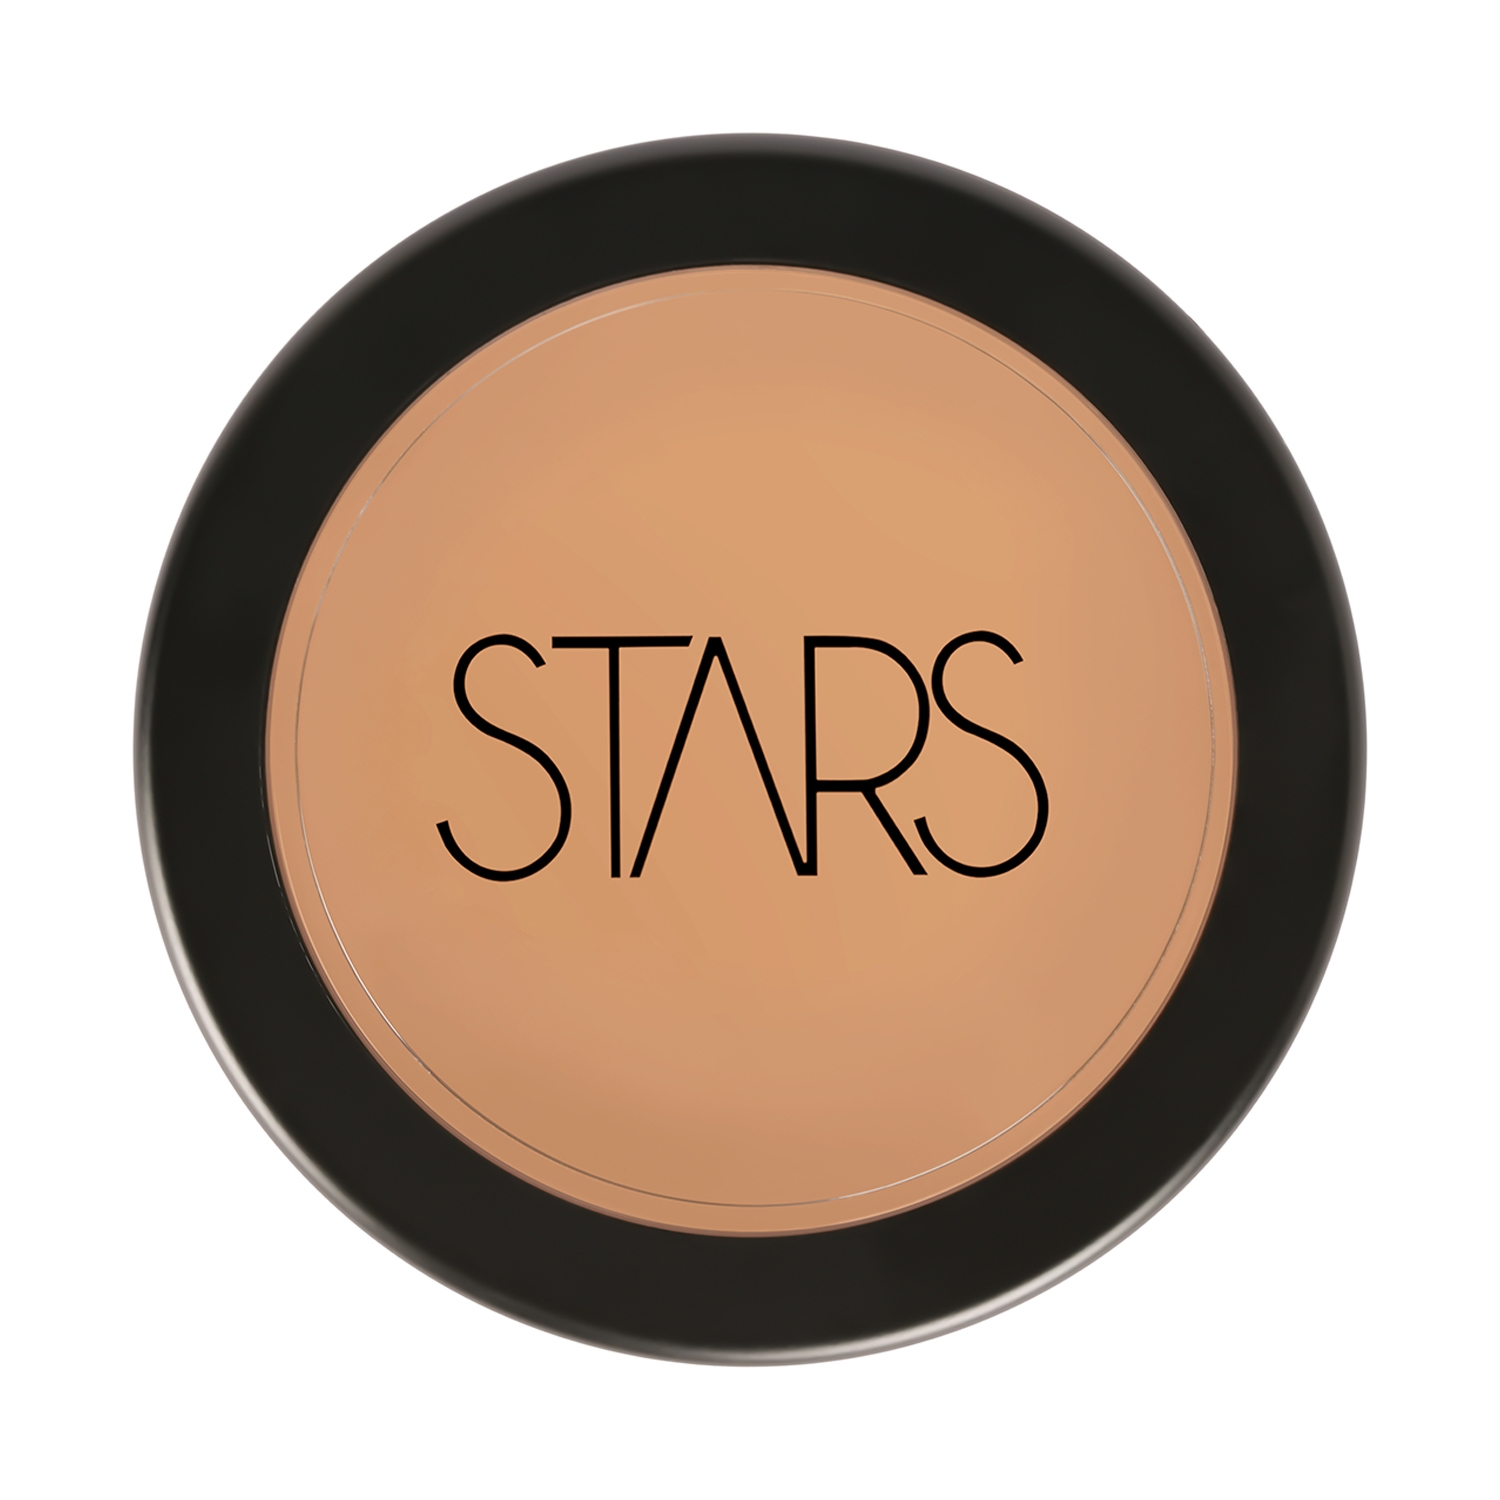 Stars Cosmetics | Stars Cosmetics Face Make Up Foundation - SFS (8g)